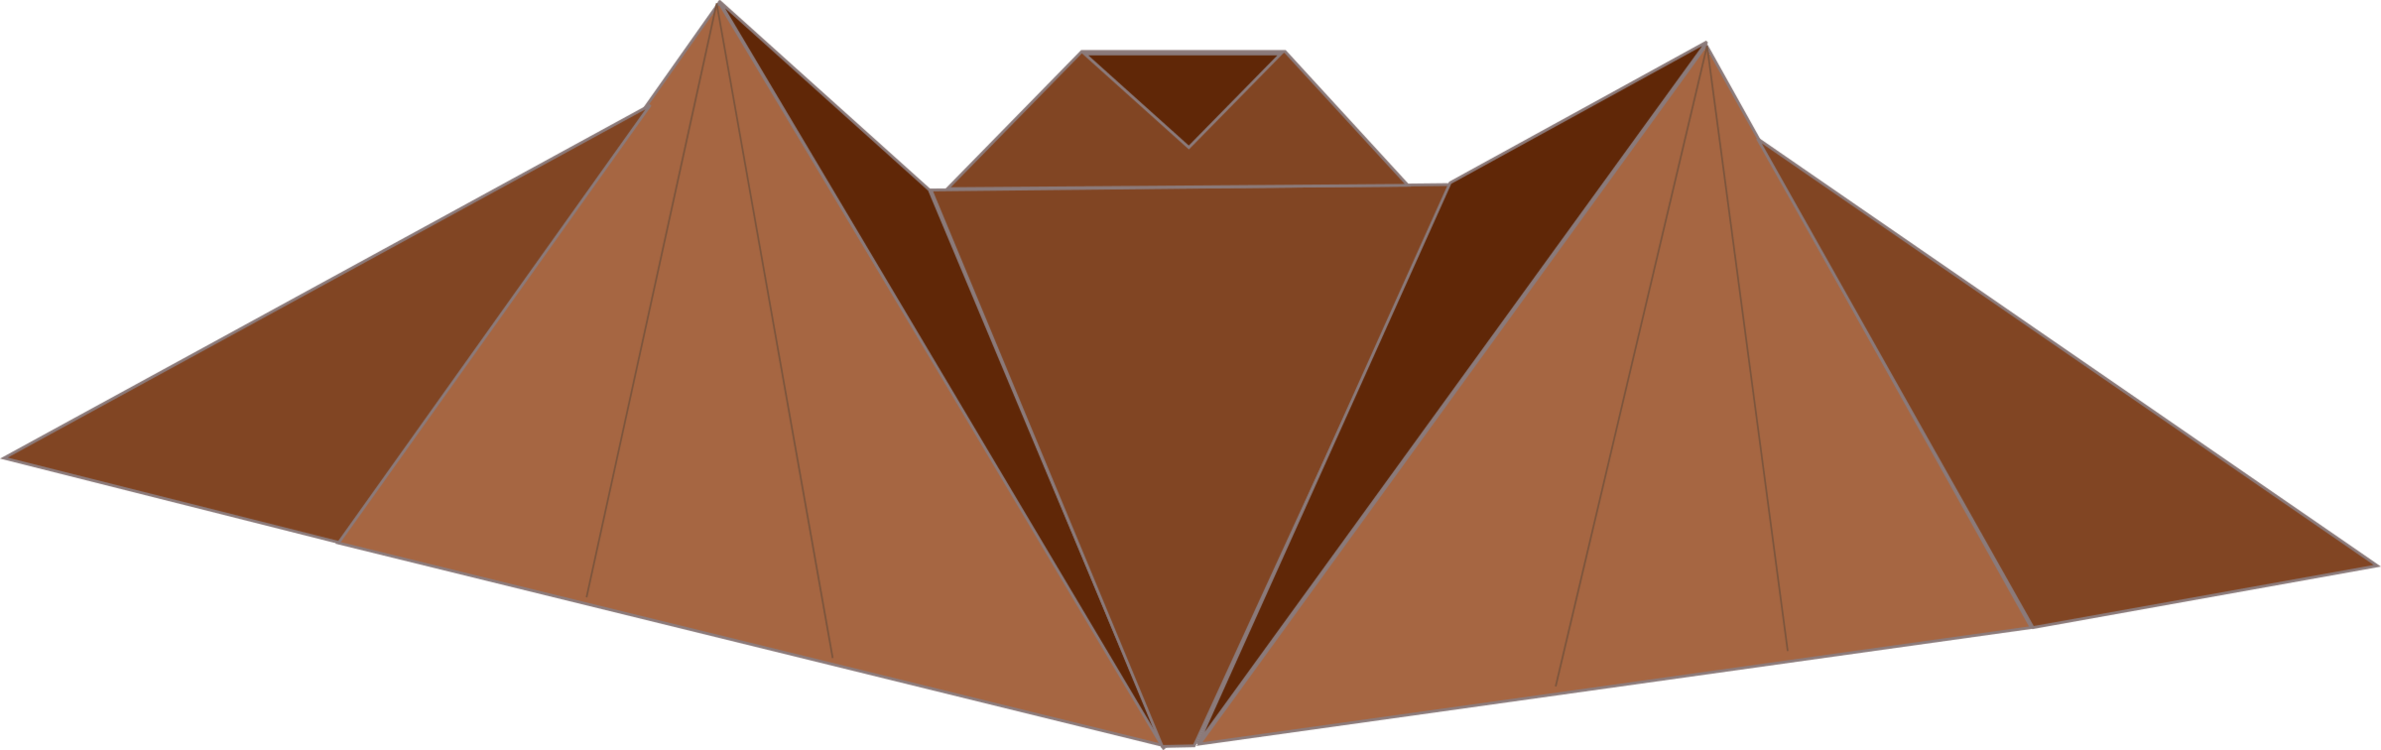 Orange Triangle M Logo - Triangle /m/083vt Symmetry Pyramid free commercial clipart - Bat ...